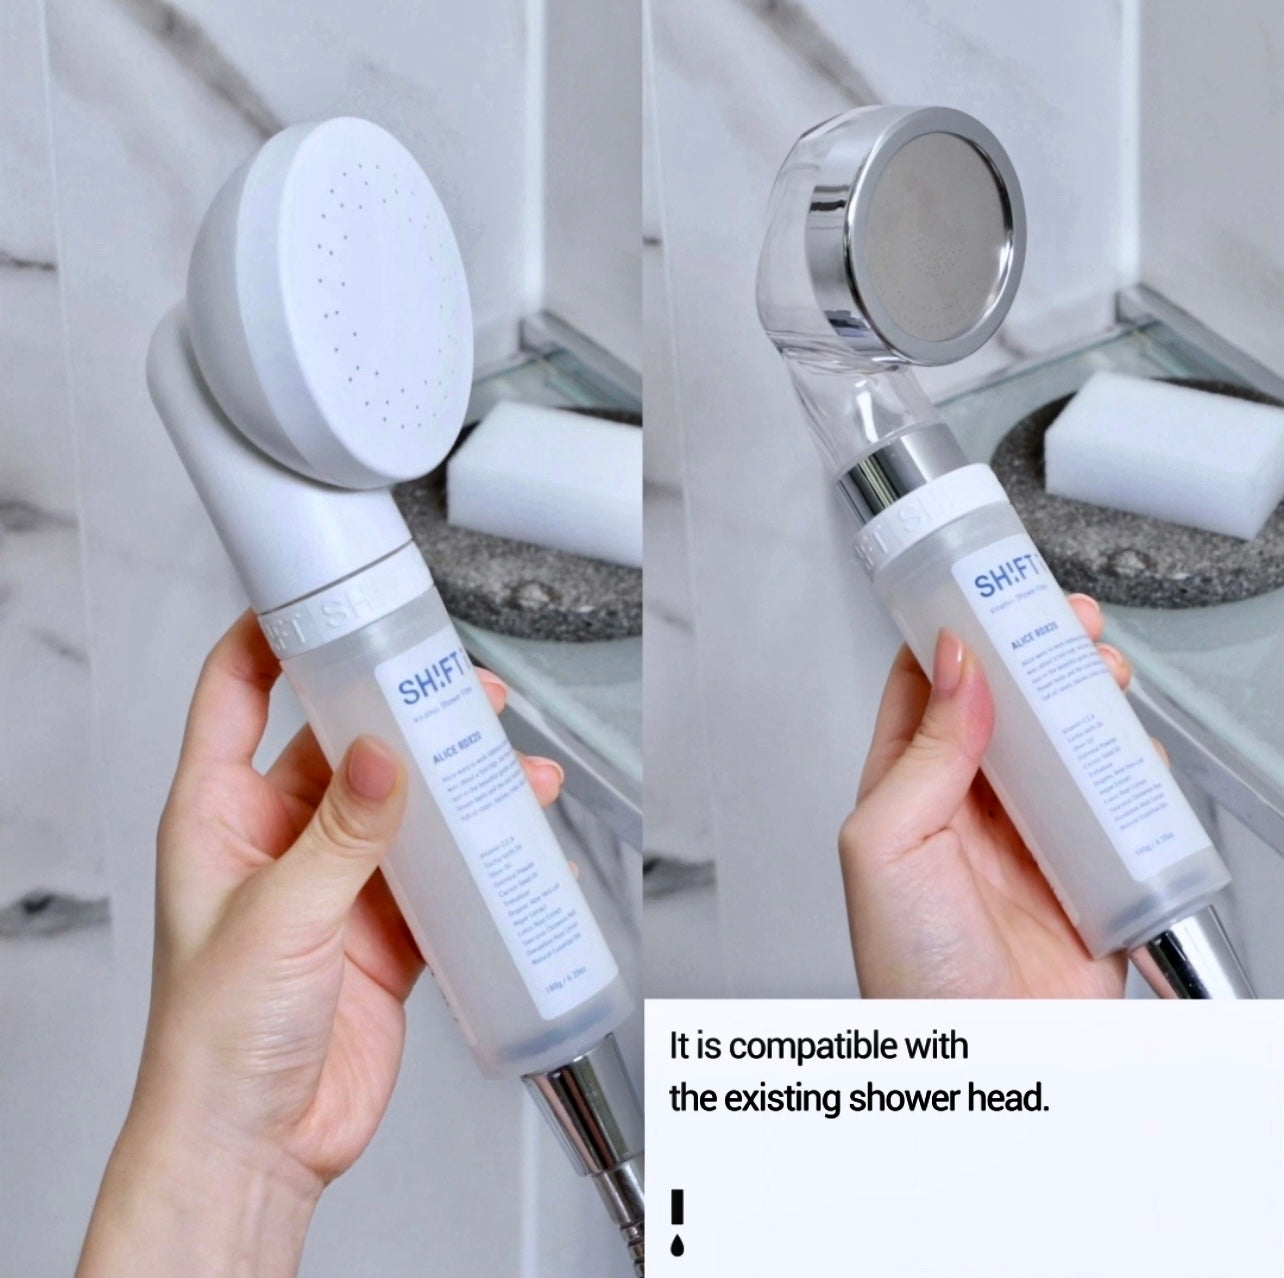 Shower Filter Shift Vitamins | Hard Water Filter | SHIFT